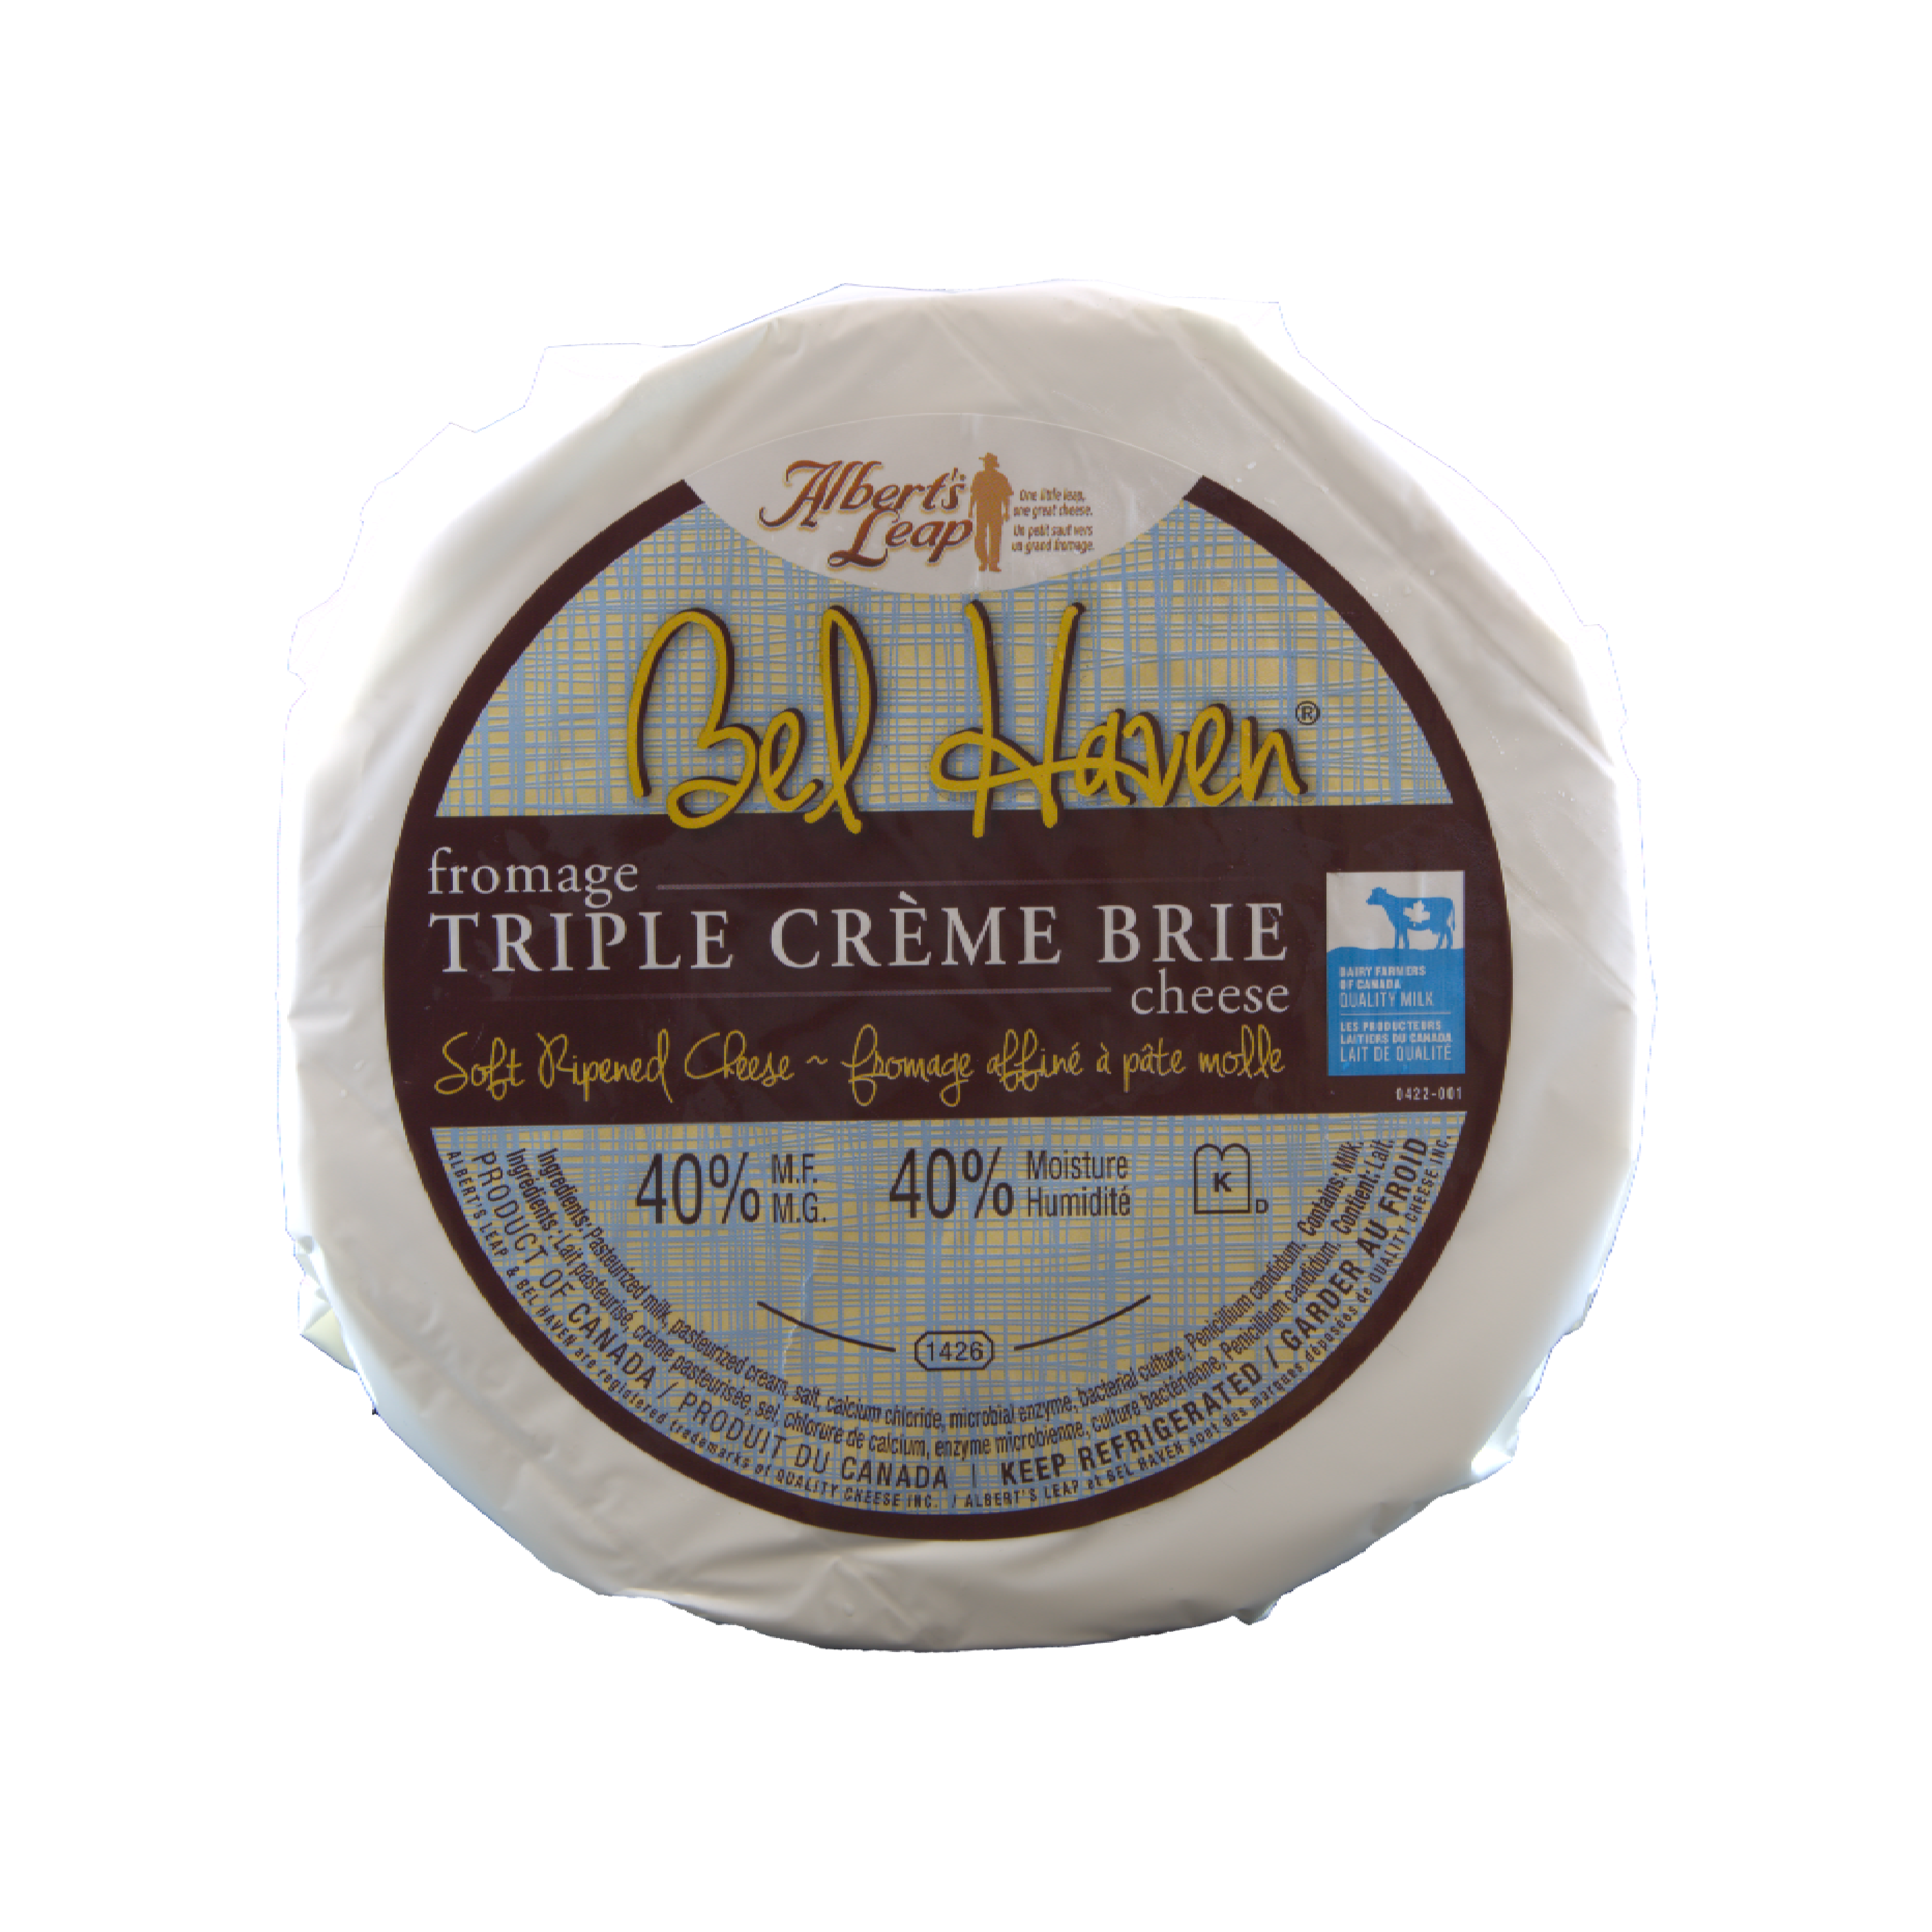 Bel Haven Triple Cream Brie 300g